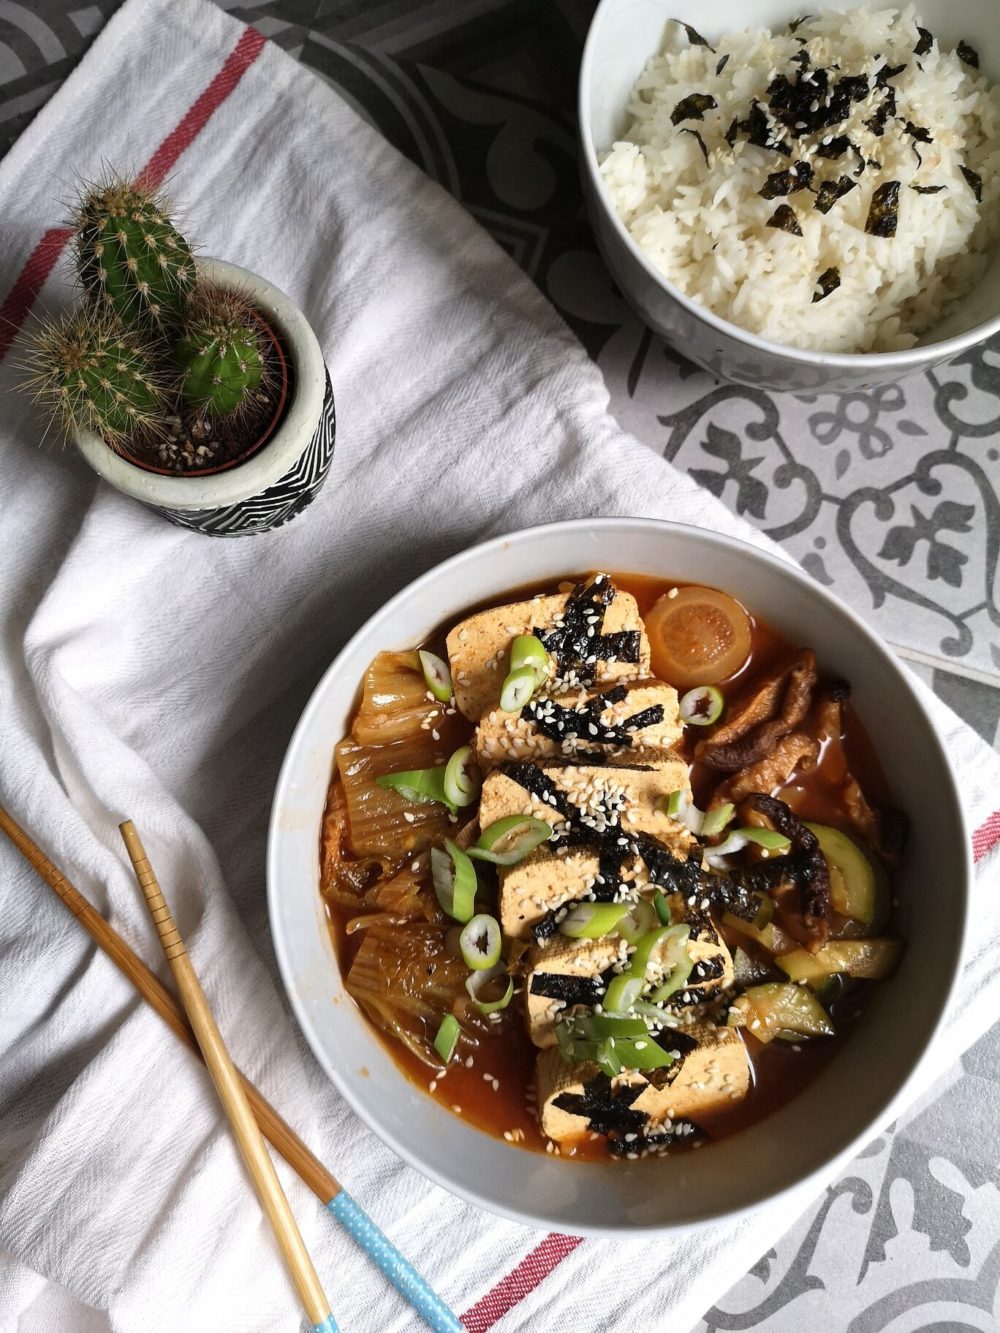 vegan kimchi jigae next to a cactus and bowl of rice